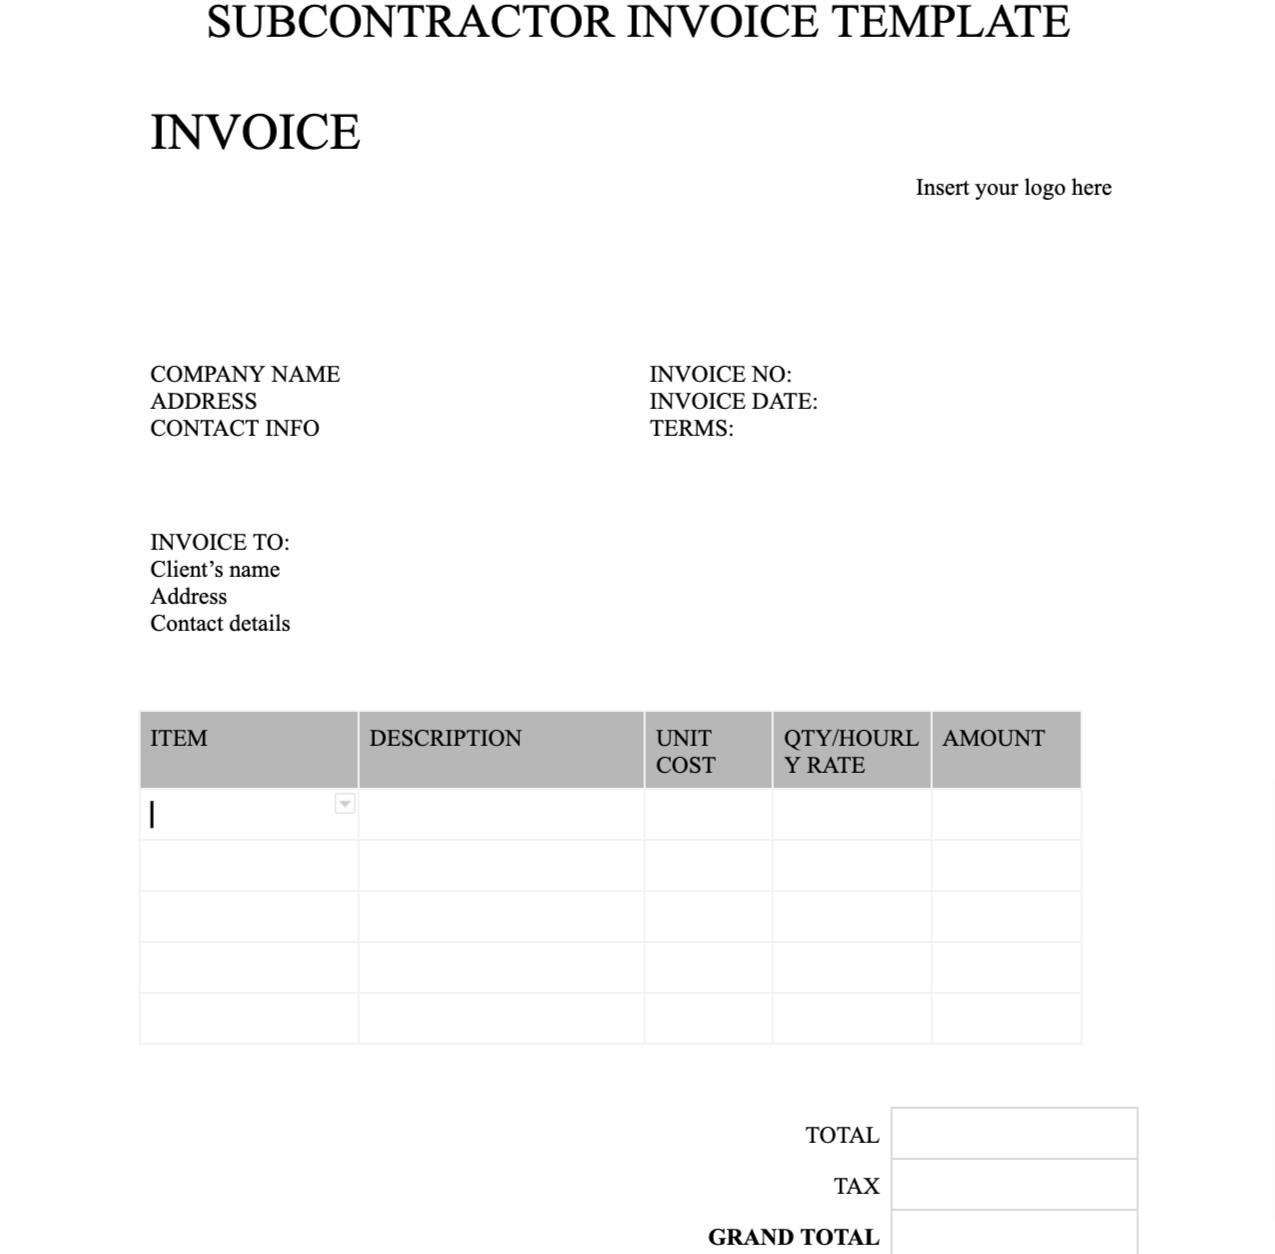 Subcontractor invoice template in google docs